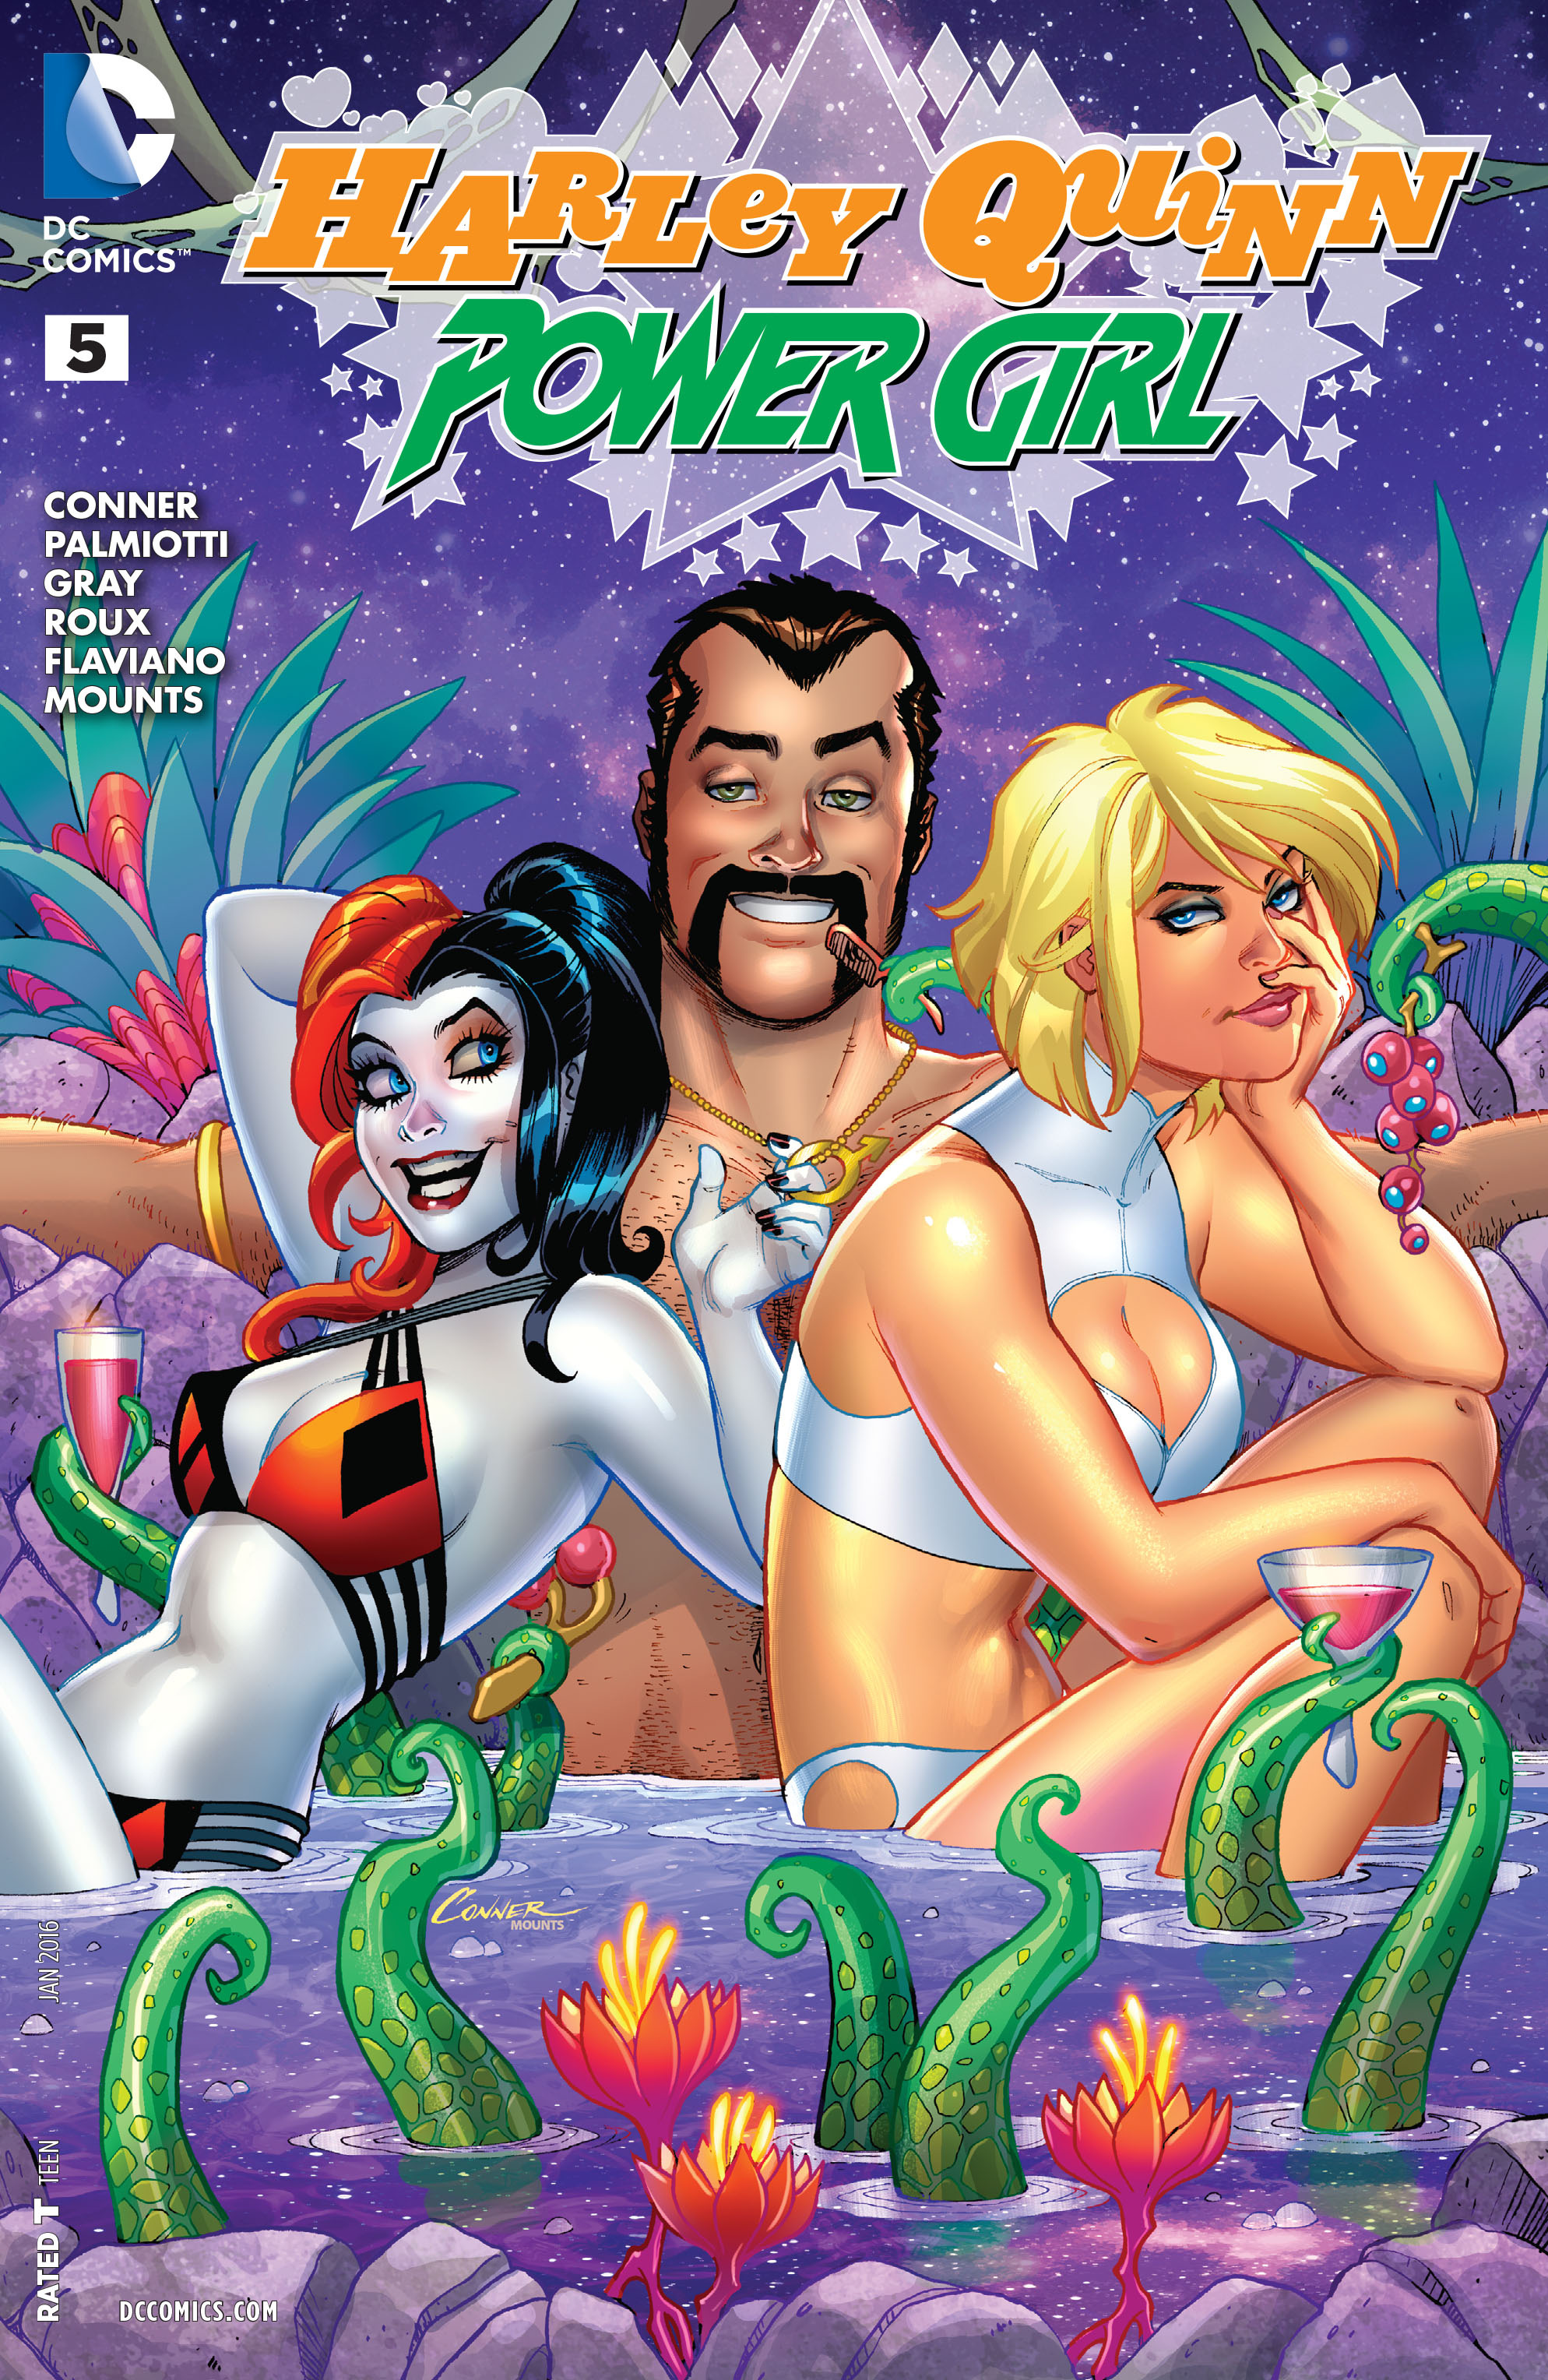 Venom Vs Power Girl Porn - Harley Quinn And Power Girl Issue 5 | Read Harley Quinn And Power Girl  Issue 5 comic online in high quality. Read Full Comic online for free -  Read comics online in